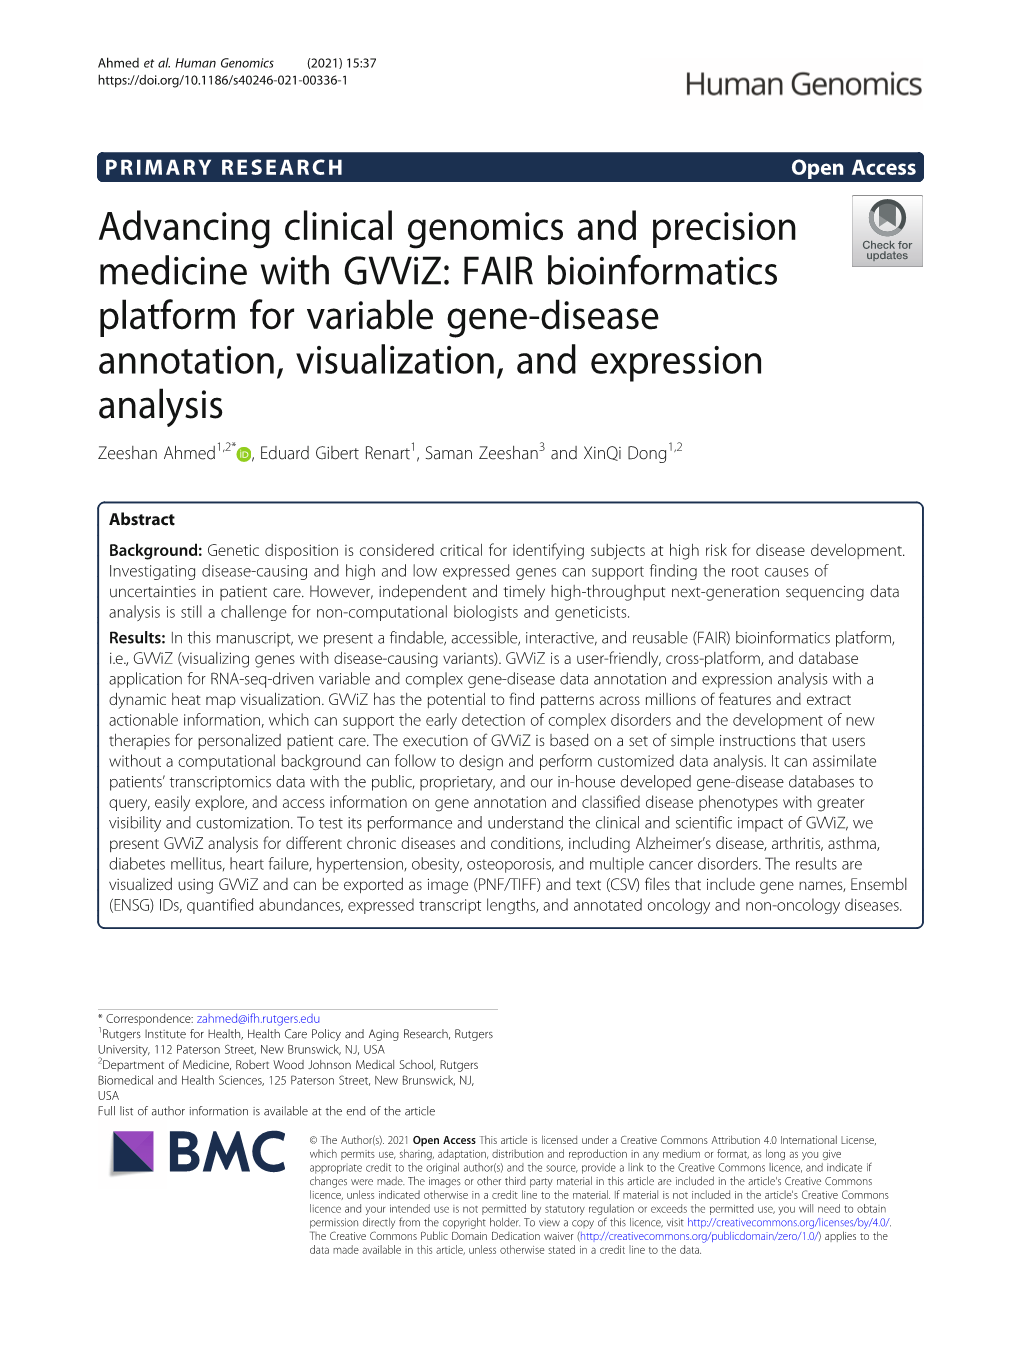 Advancing Clinical Genomics and Precision